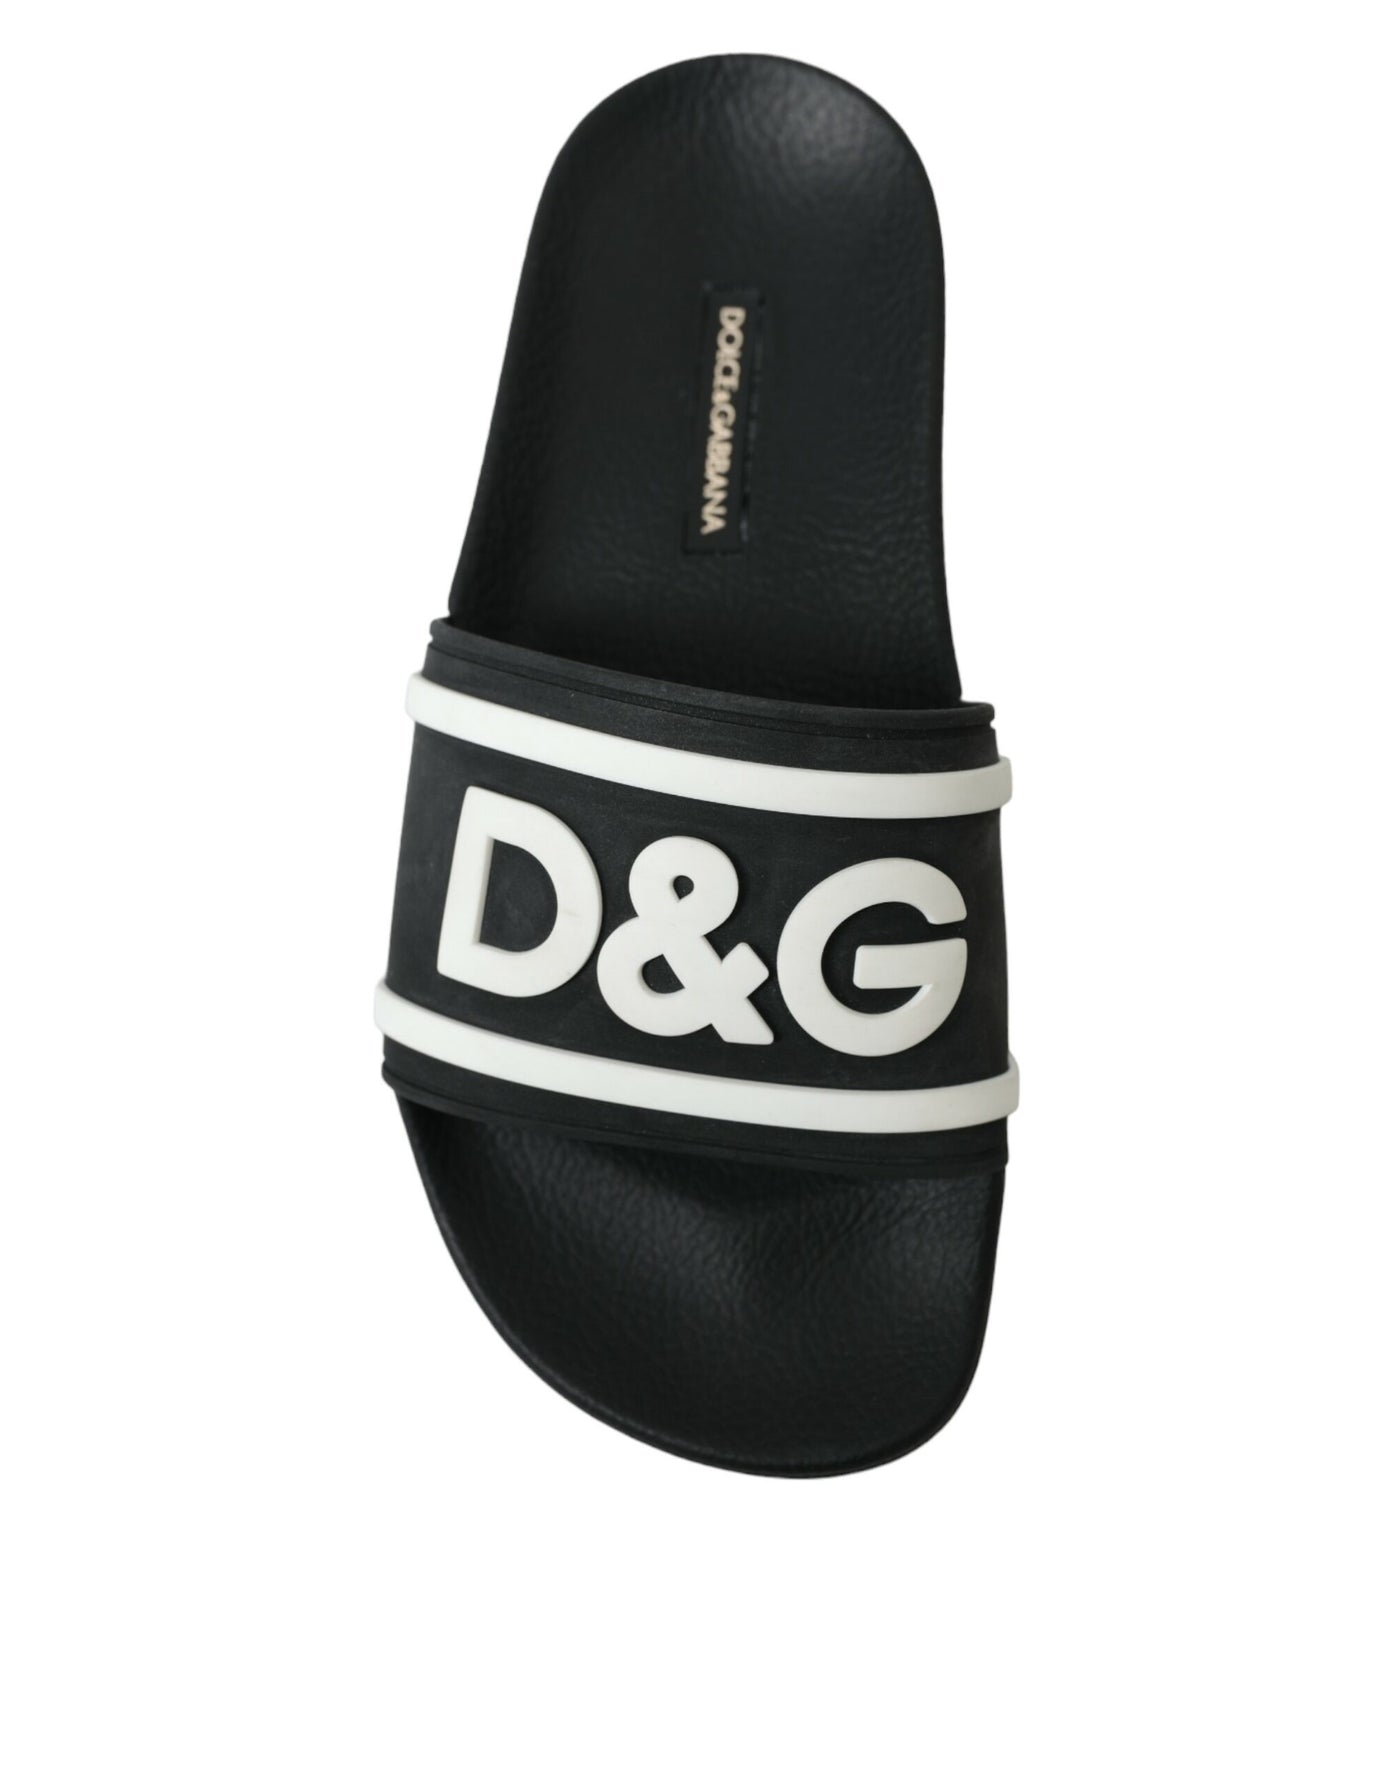 Dolce & Gabbana Black Rubber Beachwear Slippers Sandals Shoes